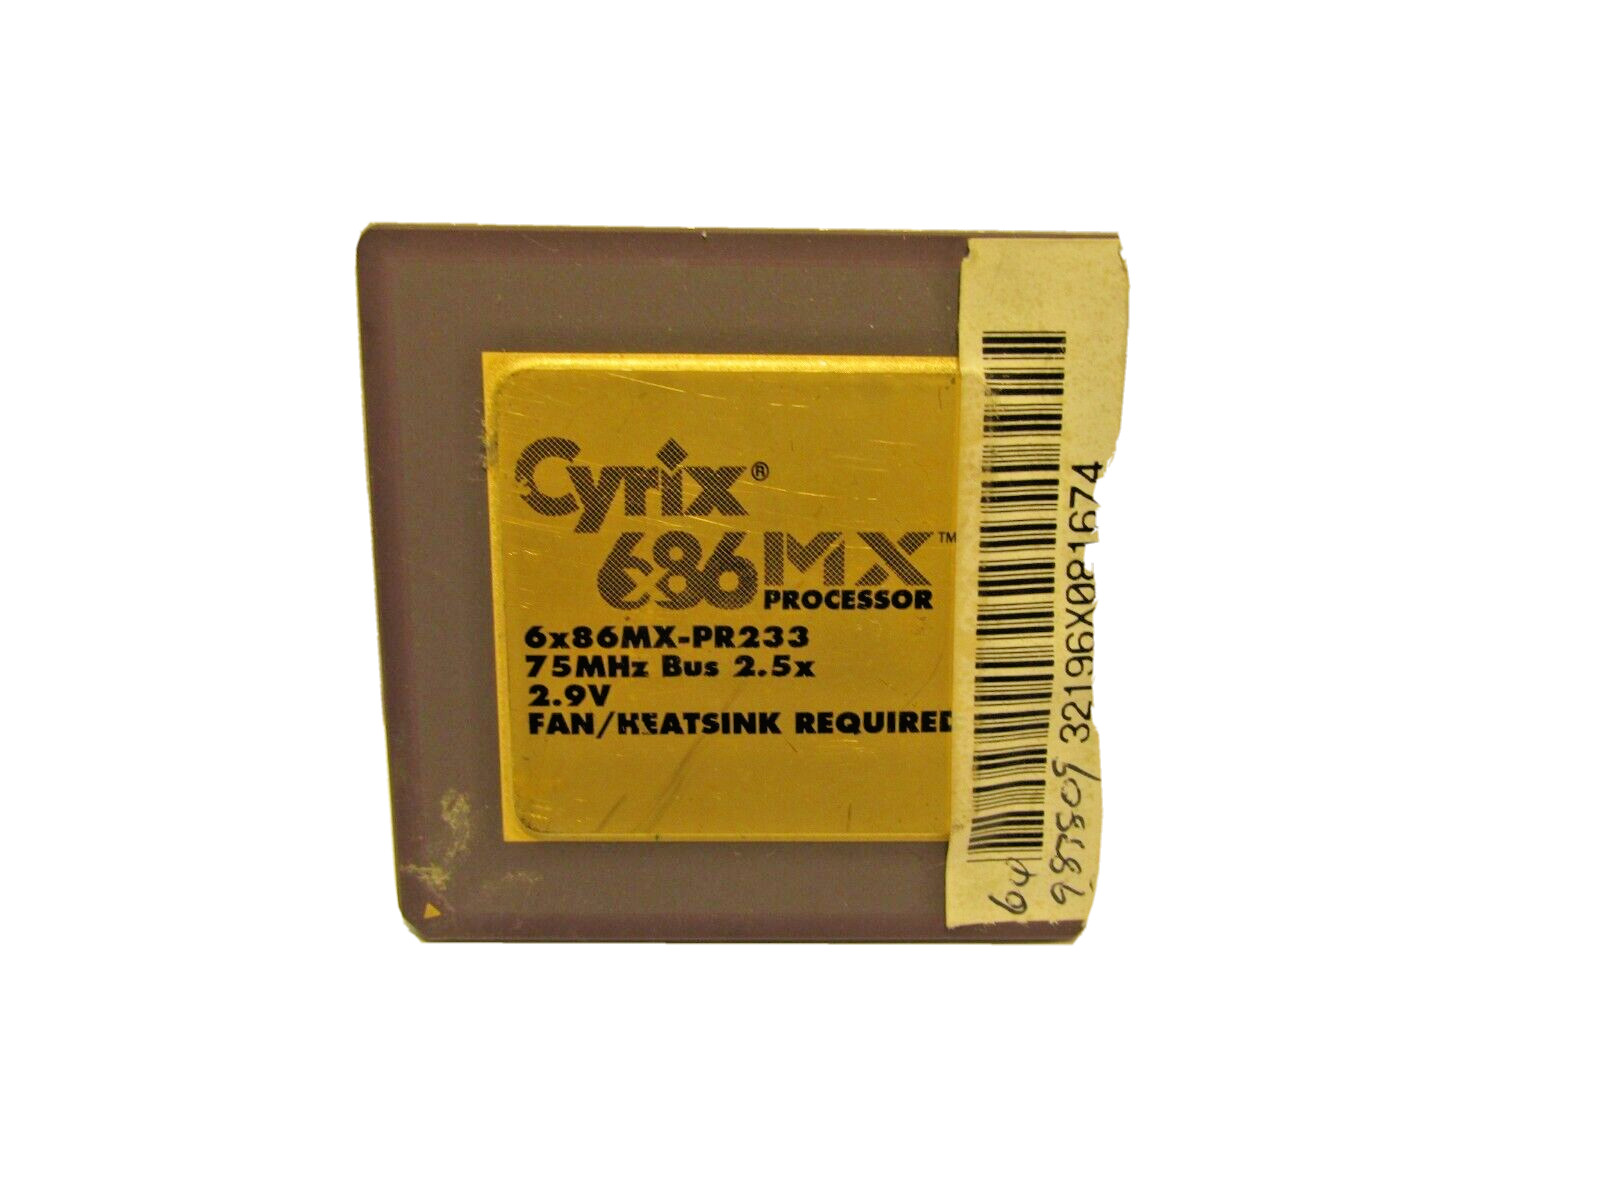 Cyrix 6x86MX-PR233 75Mhz Bus 2.5x 2.9V CPU, Gold Top,preowned  working